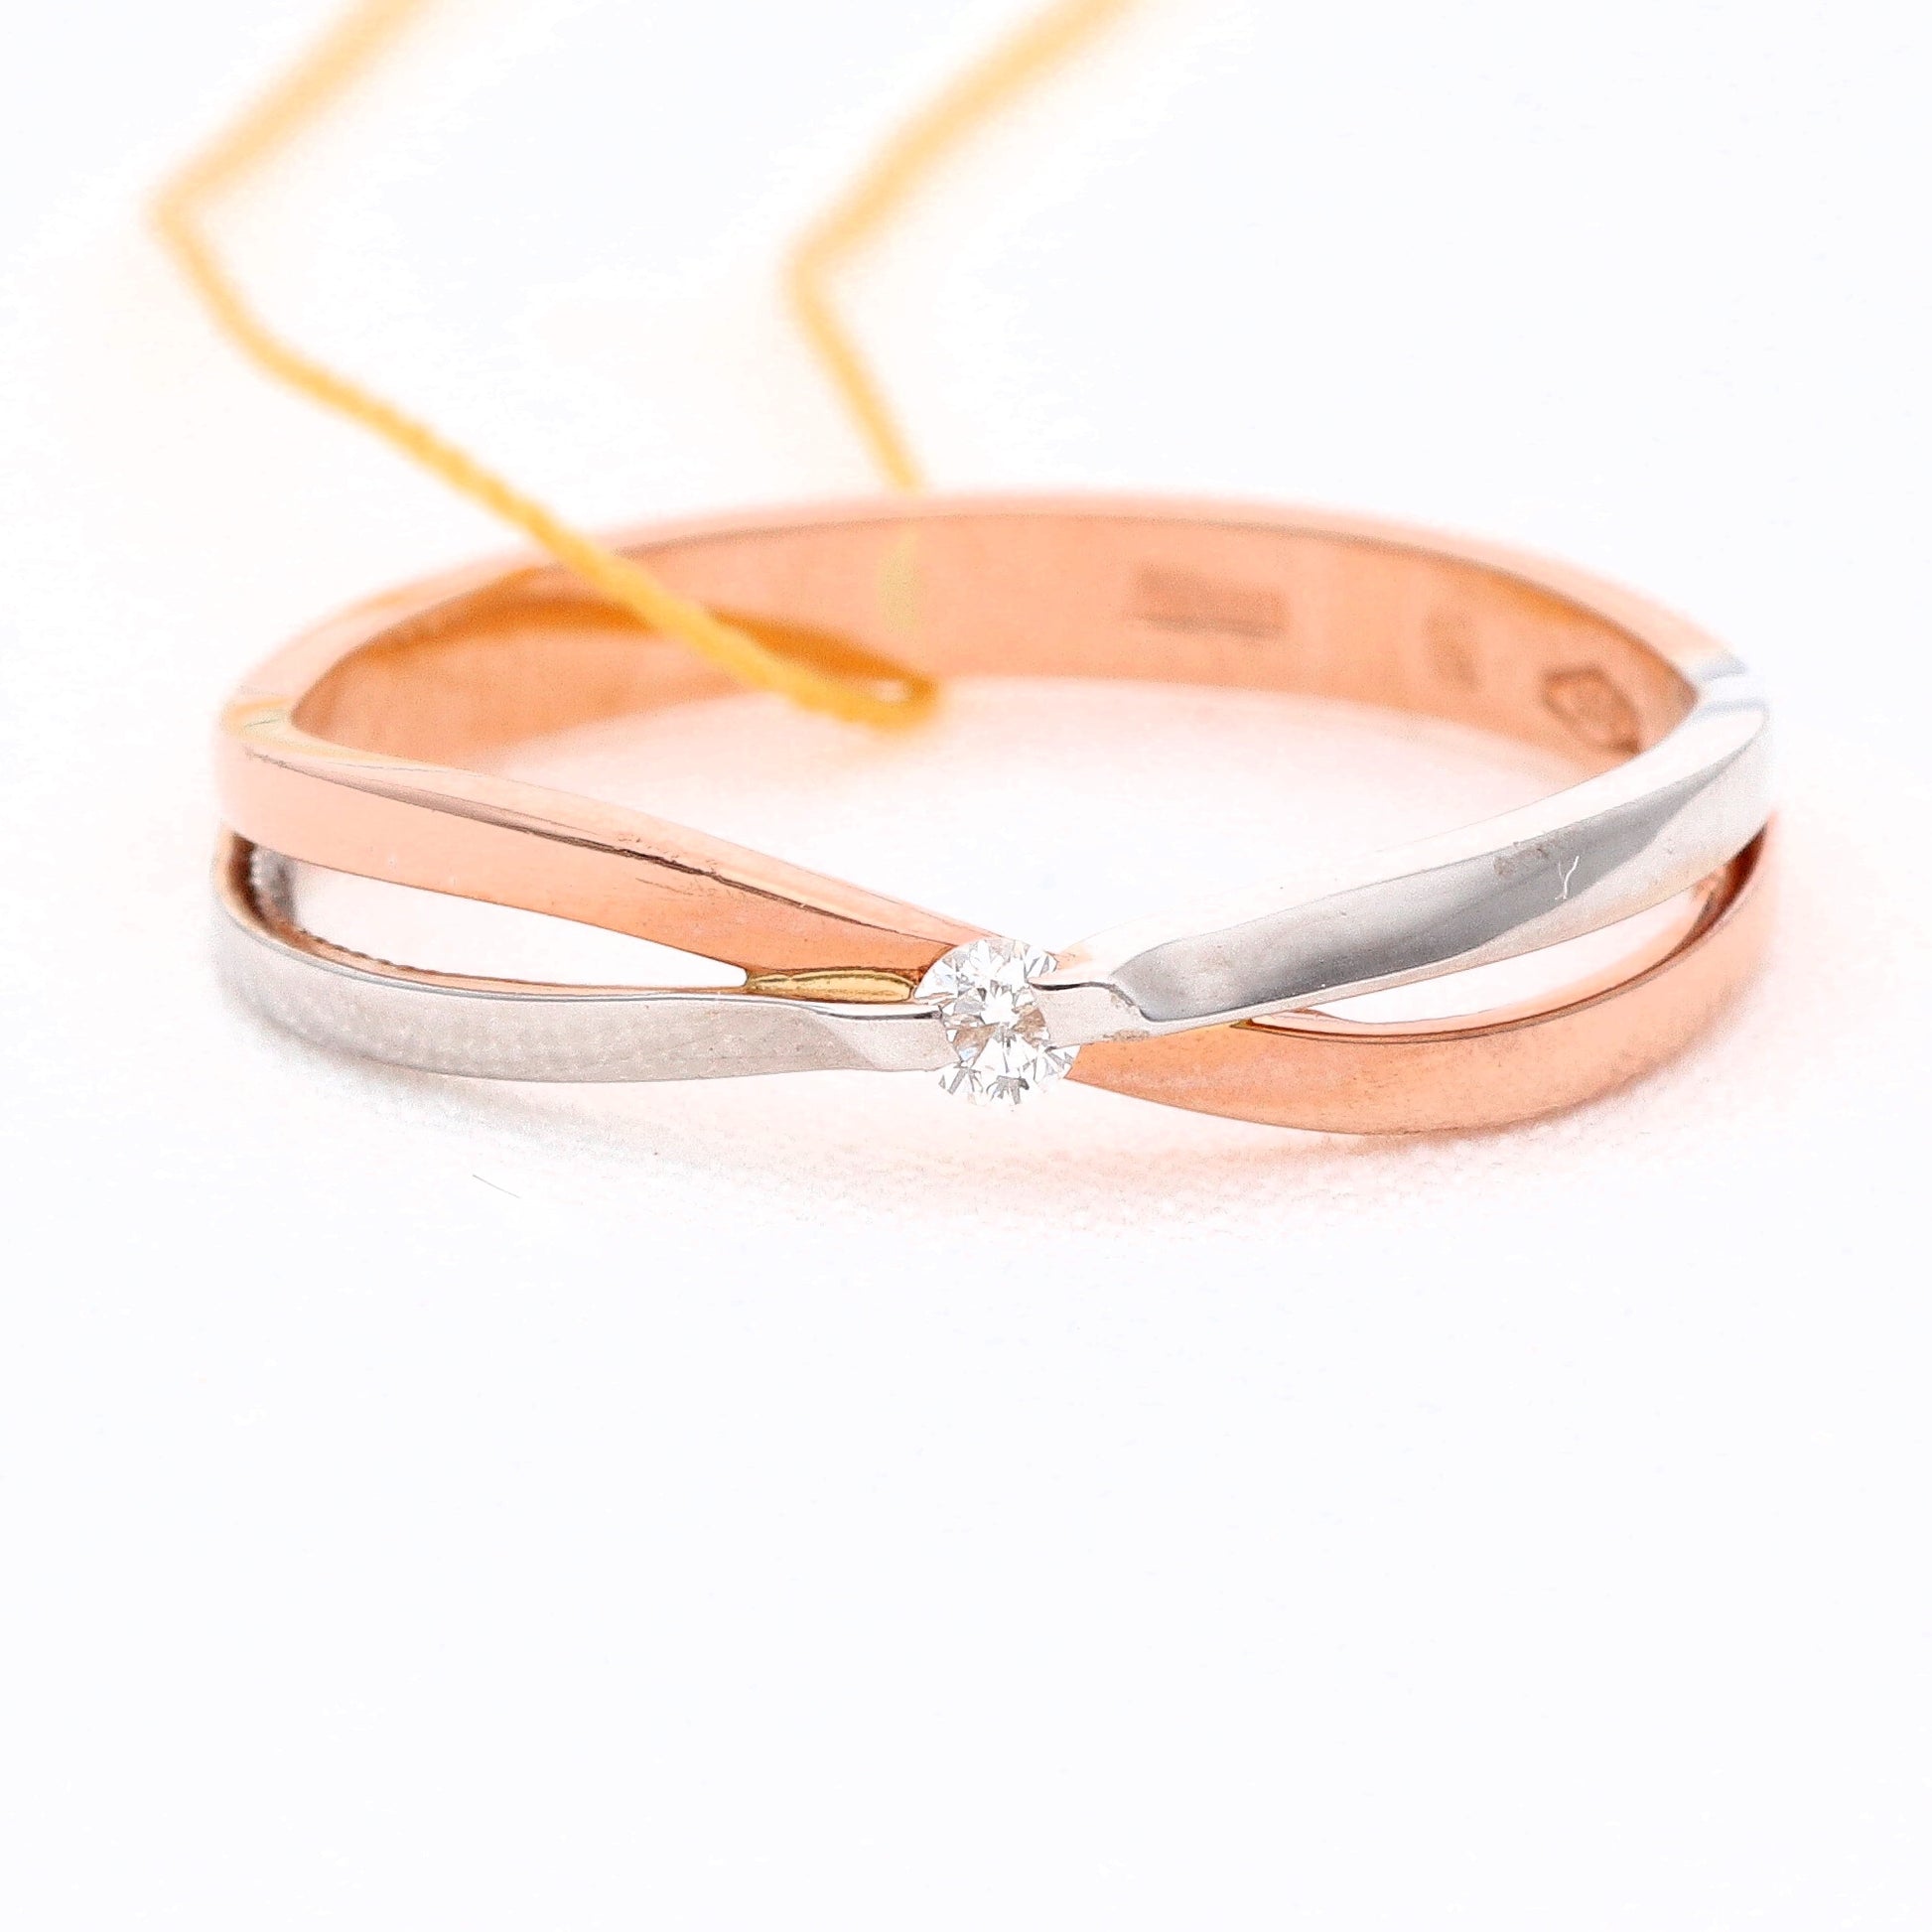 Auksinis žiedas su deimantu 0,03ct vestuviniaiziedai.lt